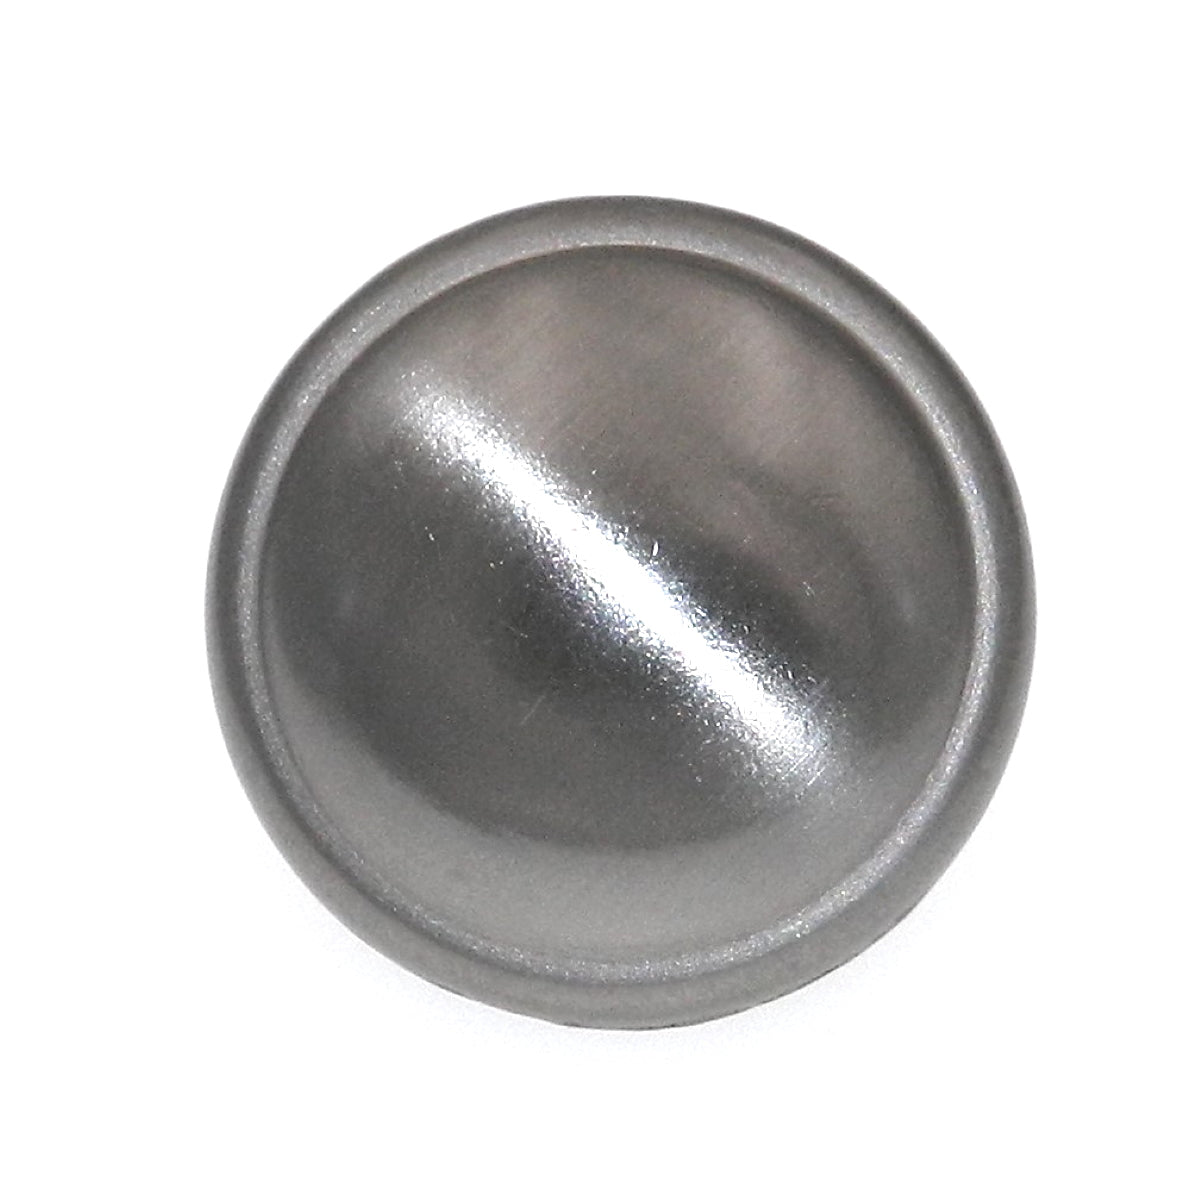 Satin Nickel 1 inch Smooth Button Cabinet Knob Pull Hardware Resources 4412362